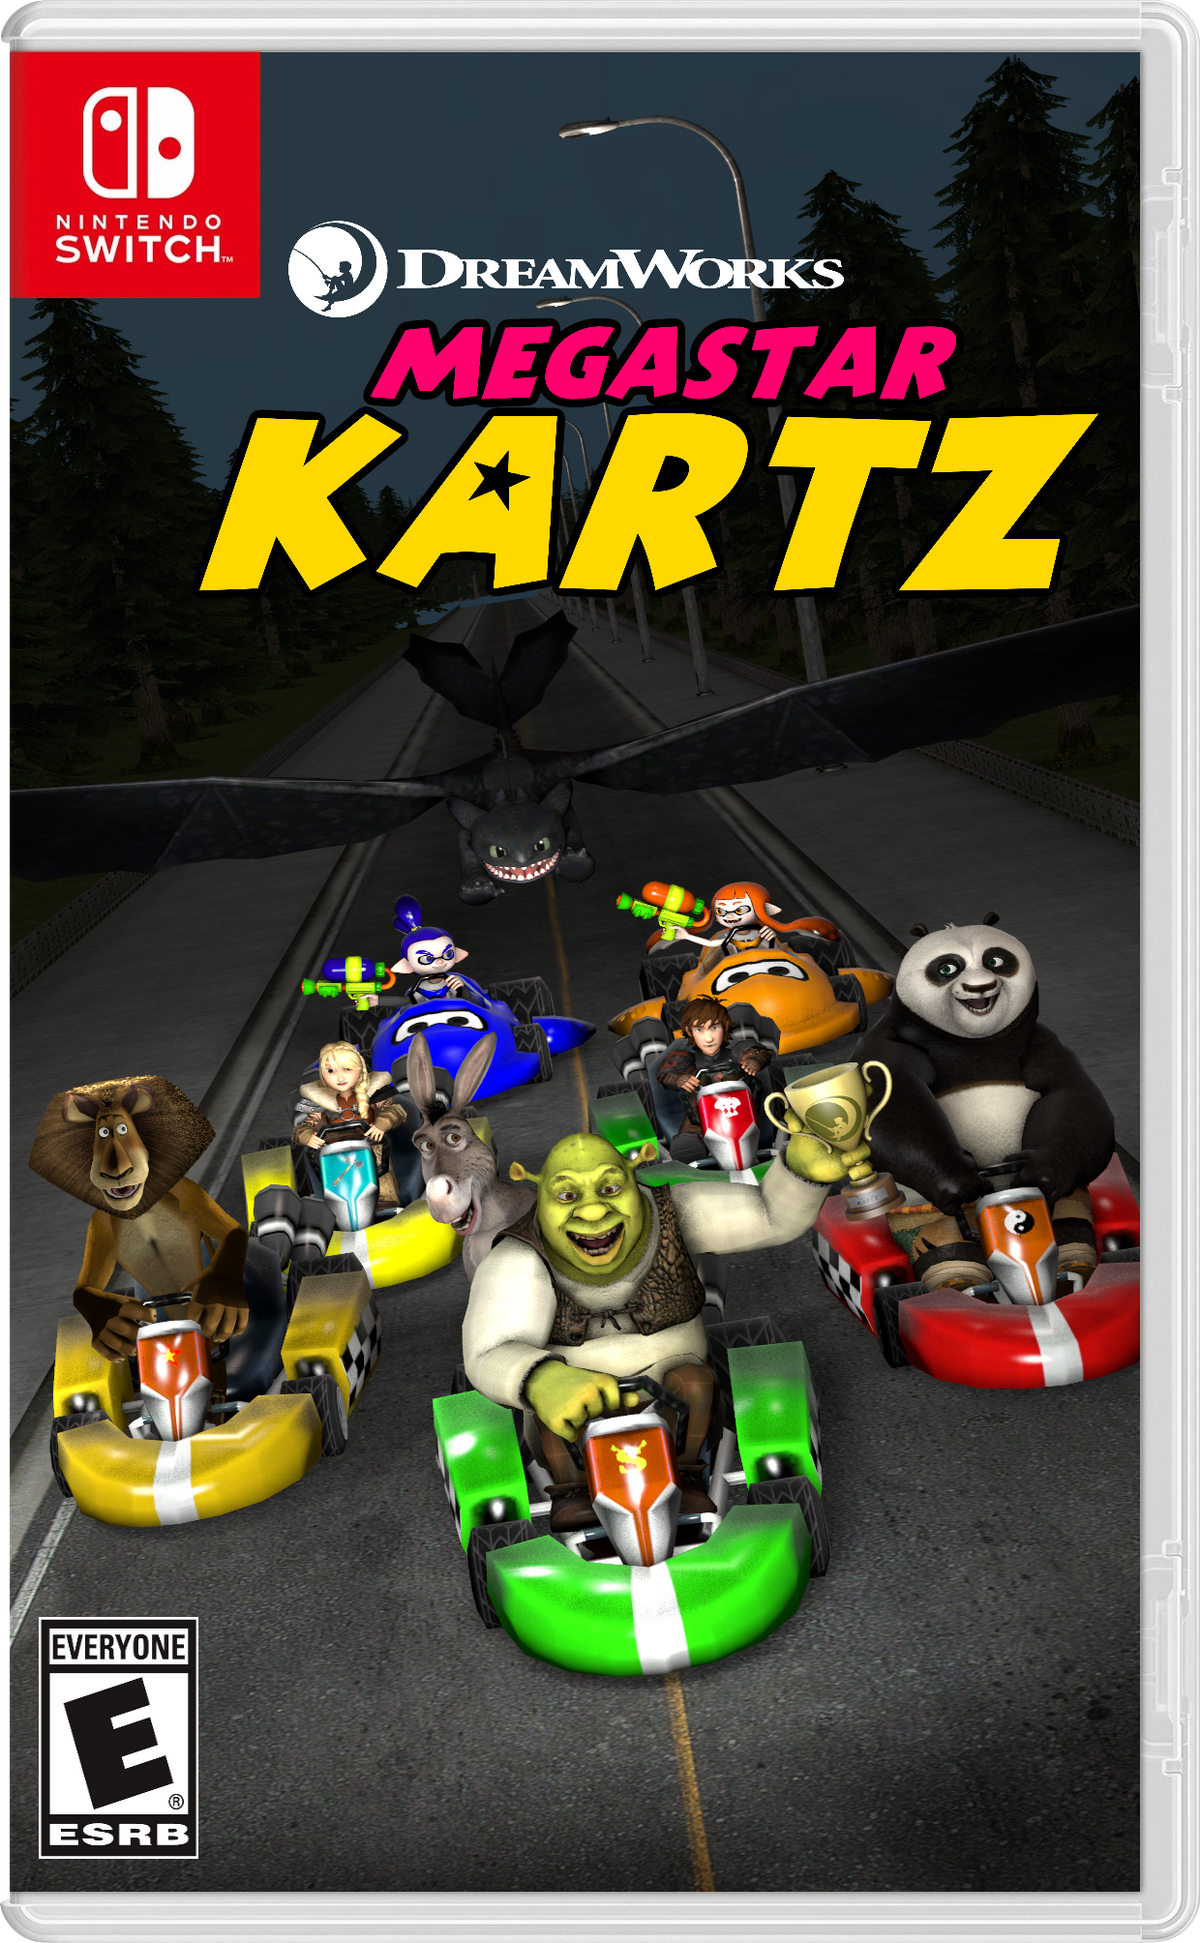 Review DreamWorks SuperStar Kartz